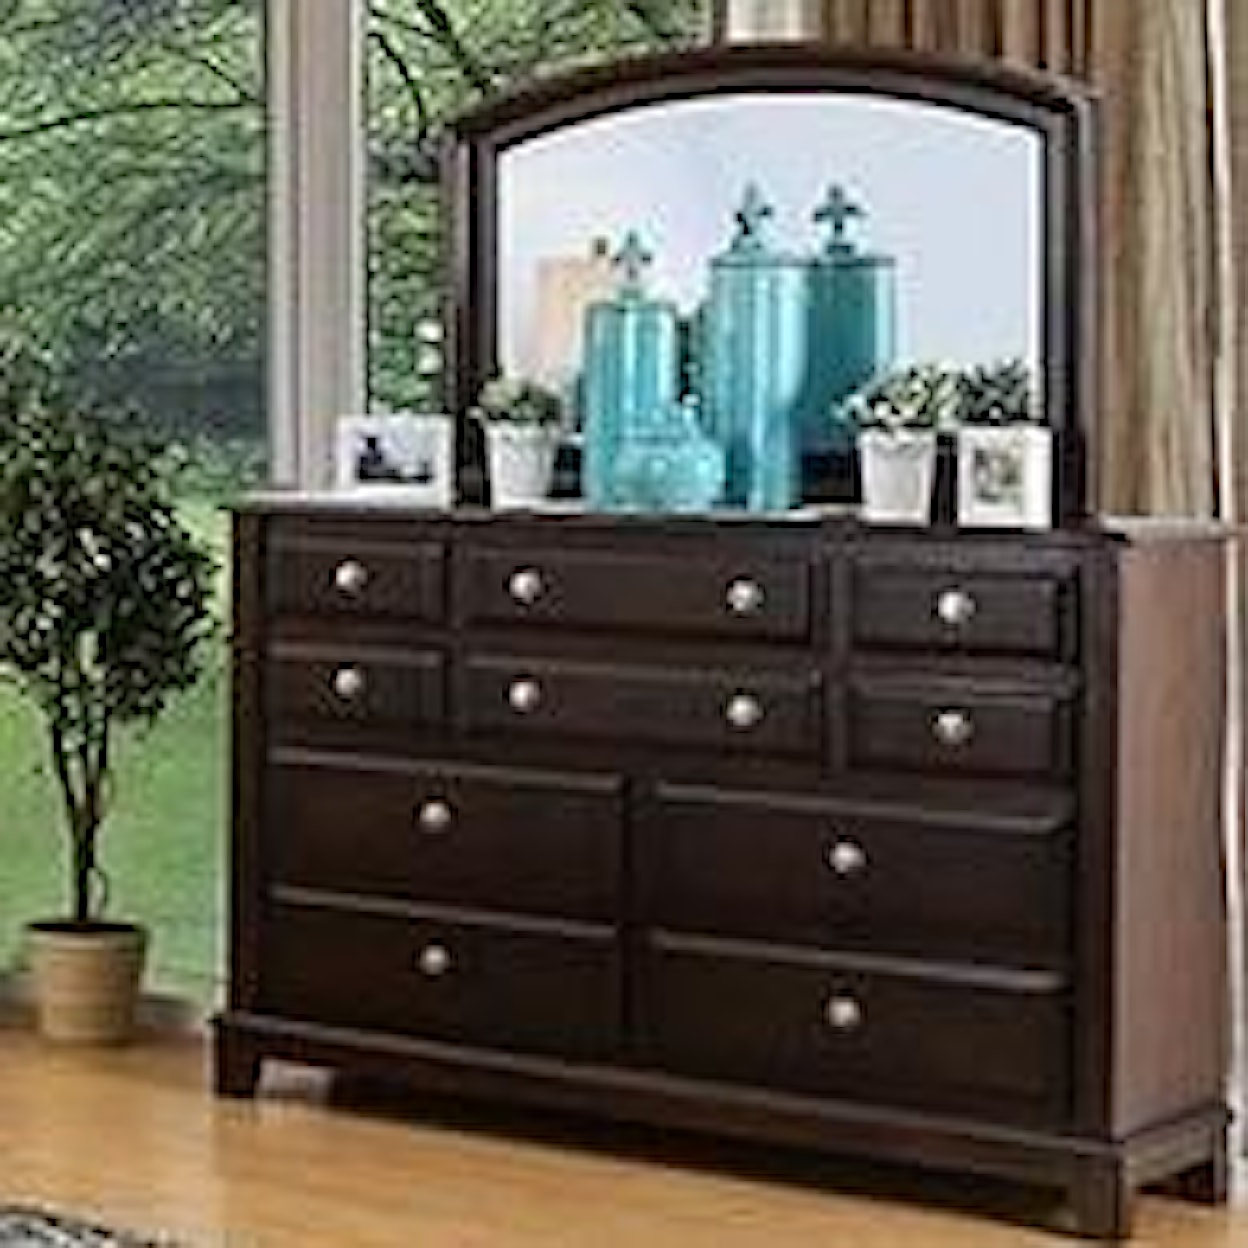 FUSA Litchville Dresser and Mirror Combination